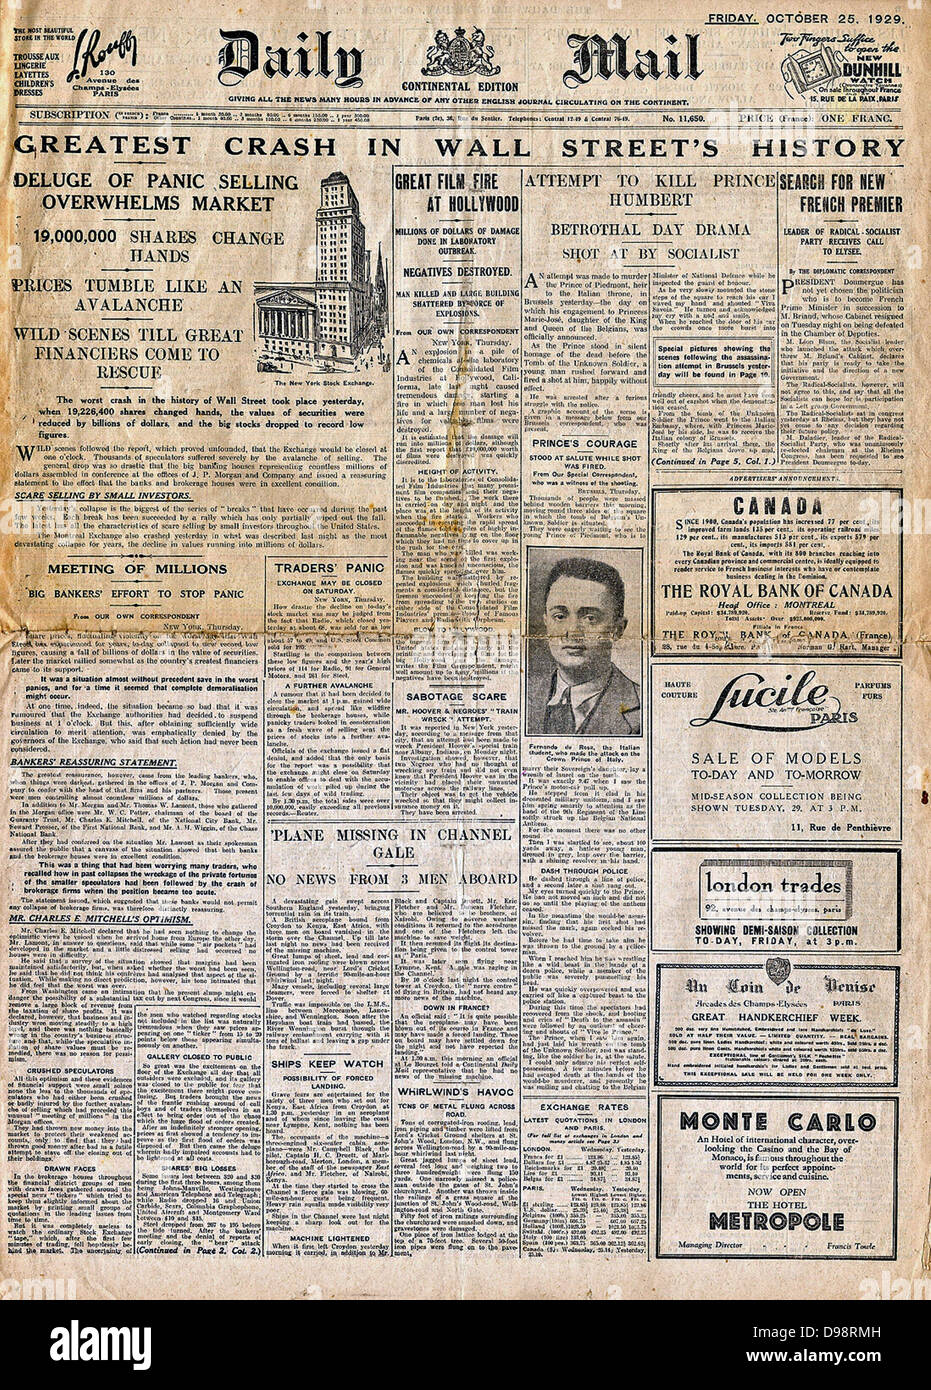 Wall Street crash' newspaper headline 1929 Stock Photo